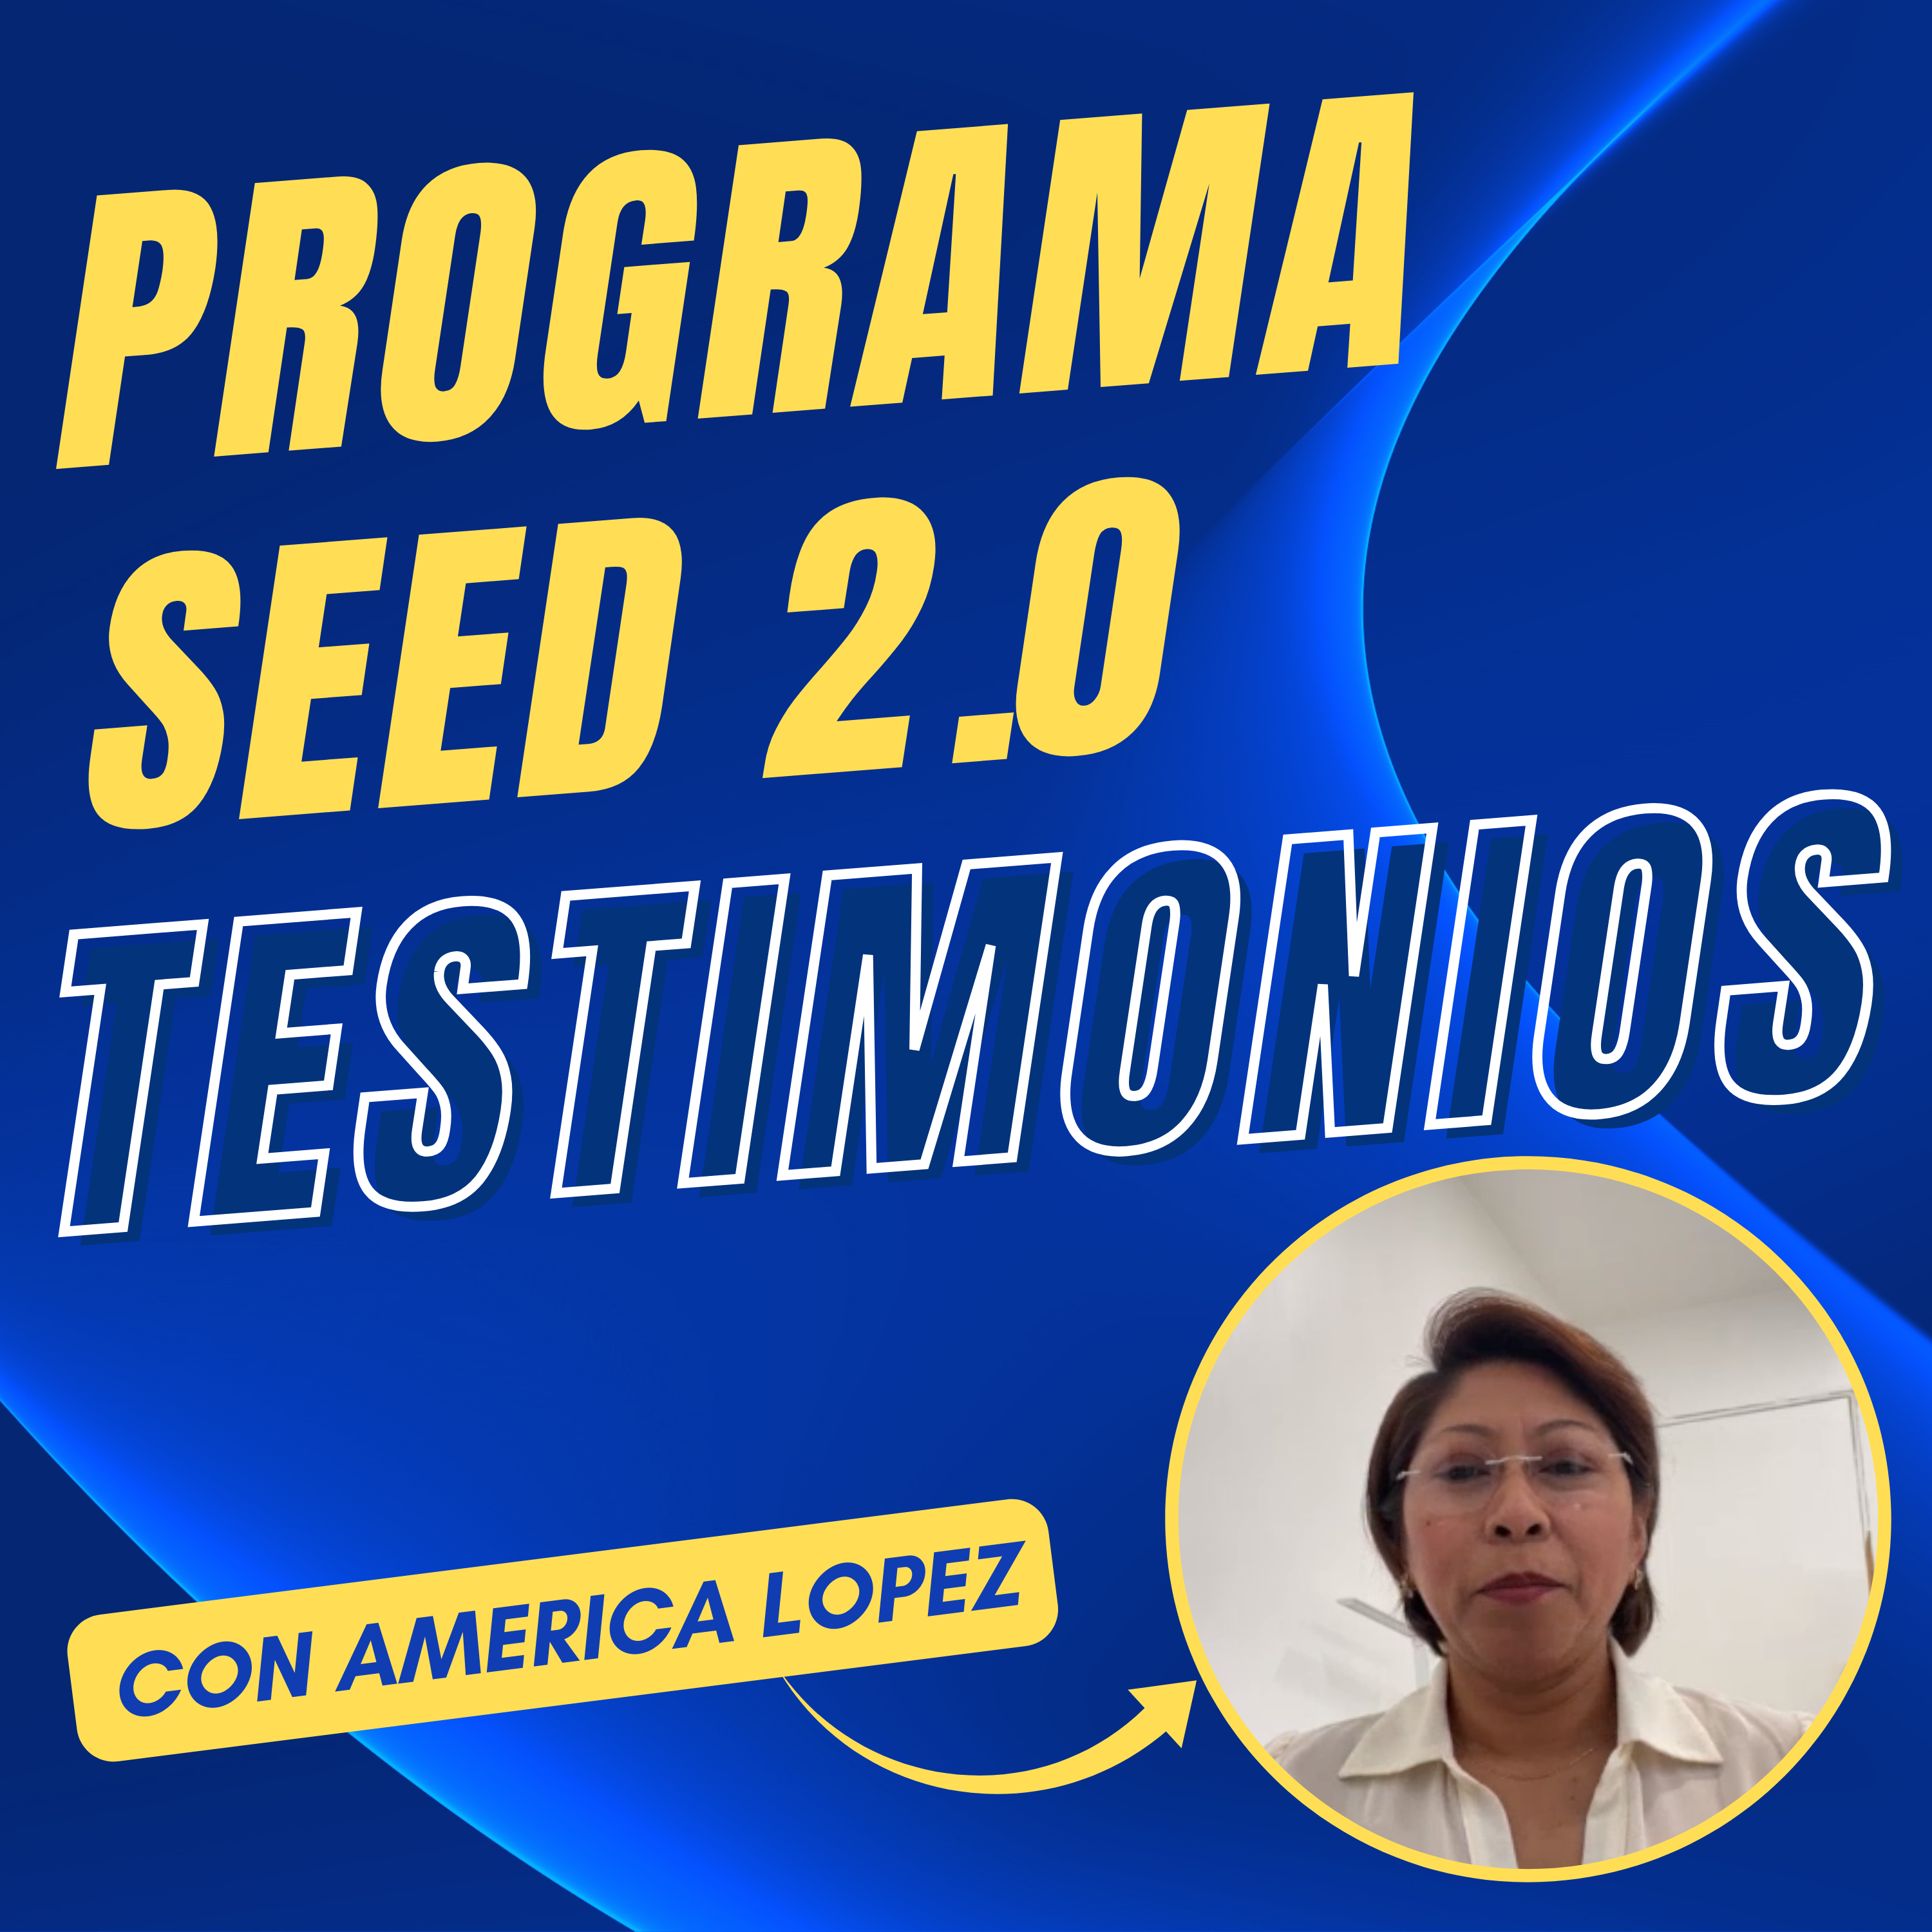 Testimonio de America Lopez sobre el programa SEED 2.0